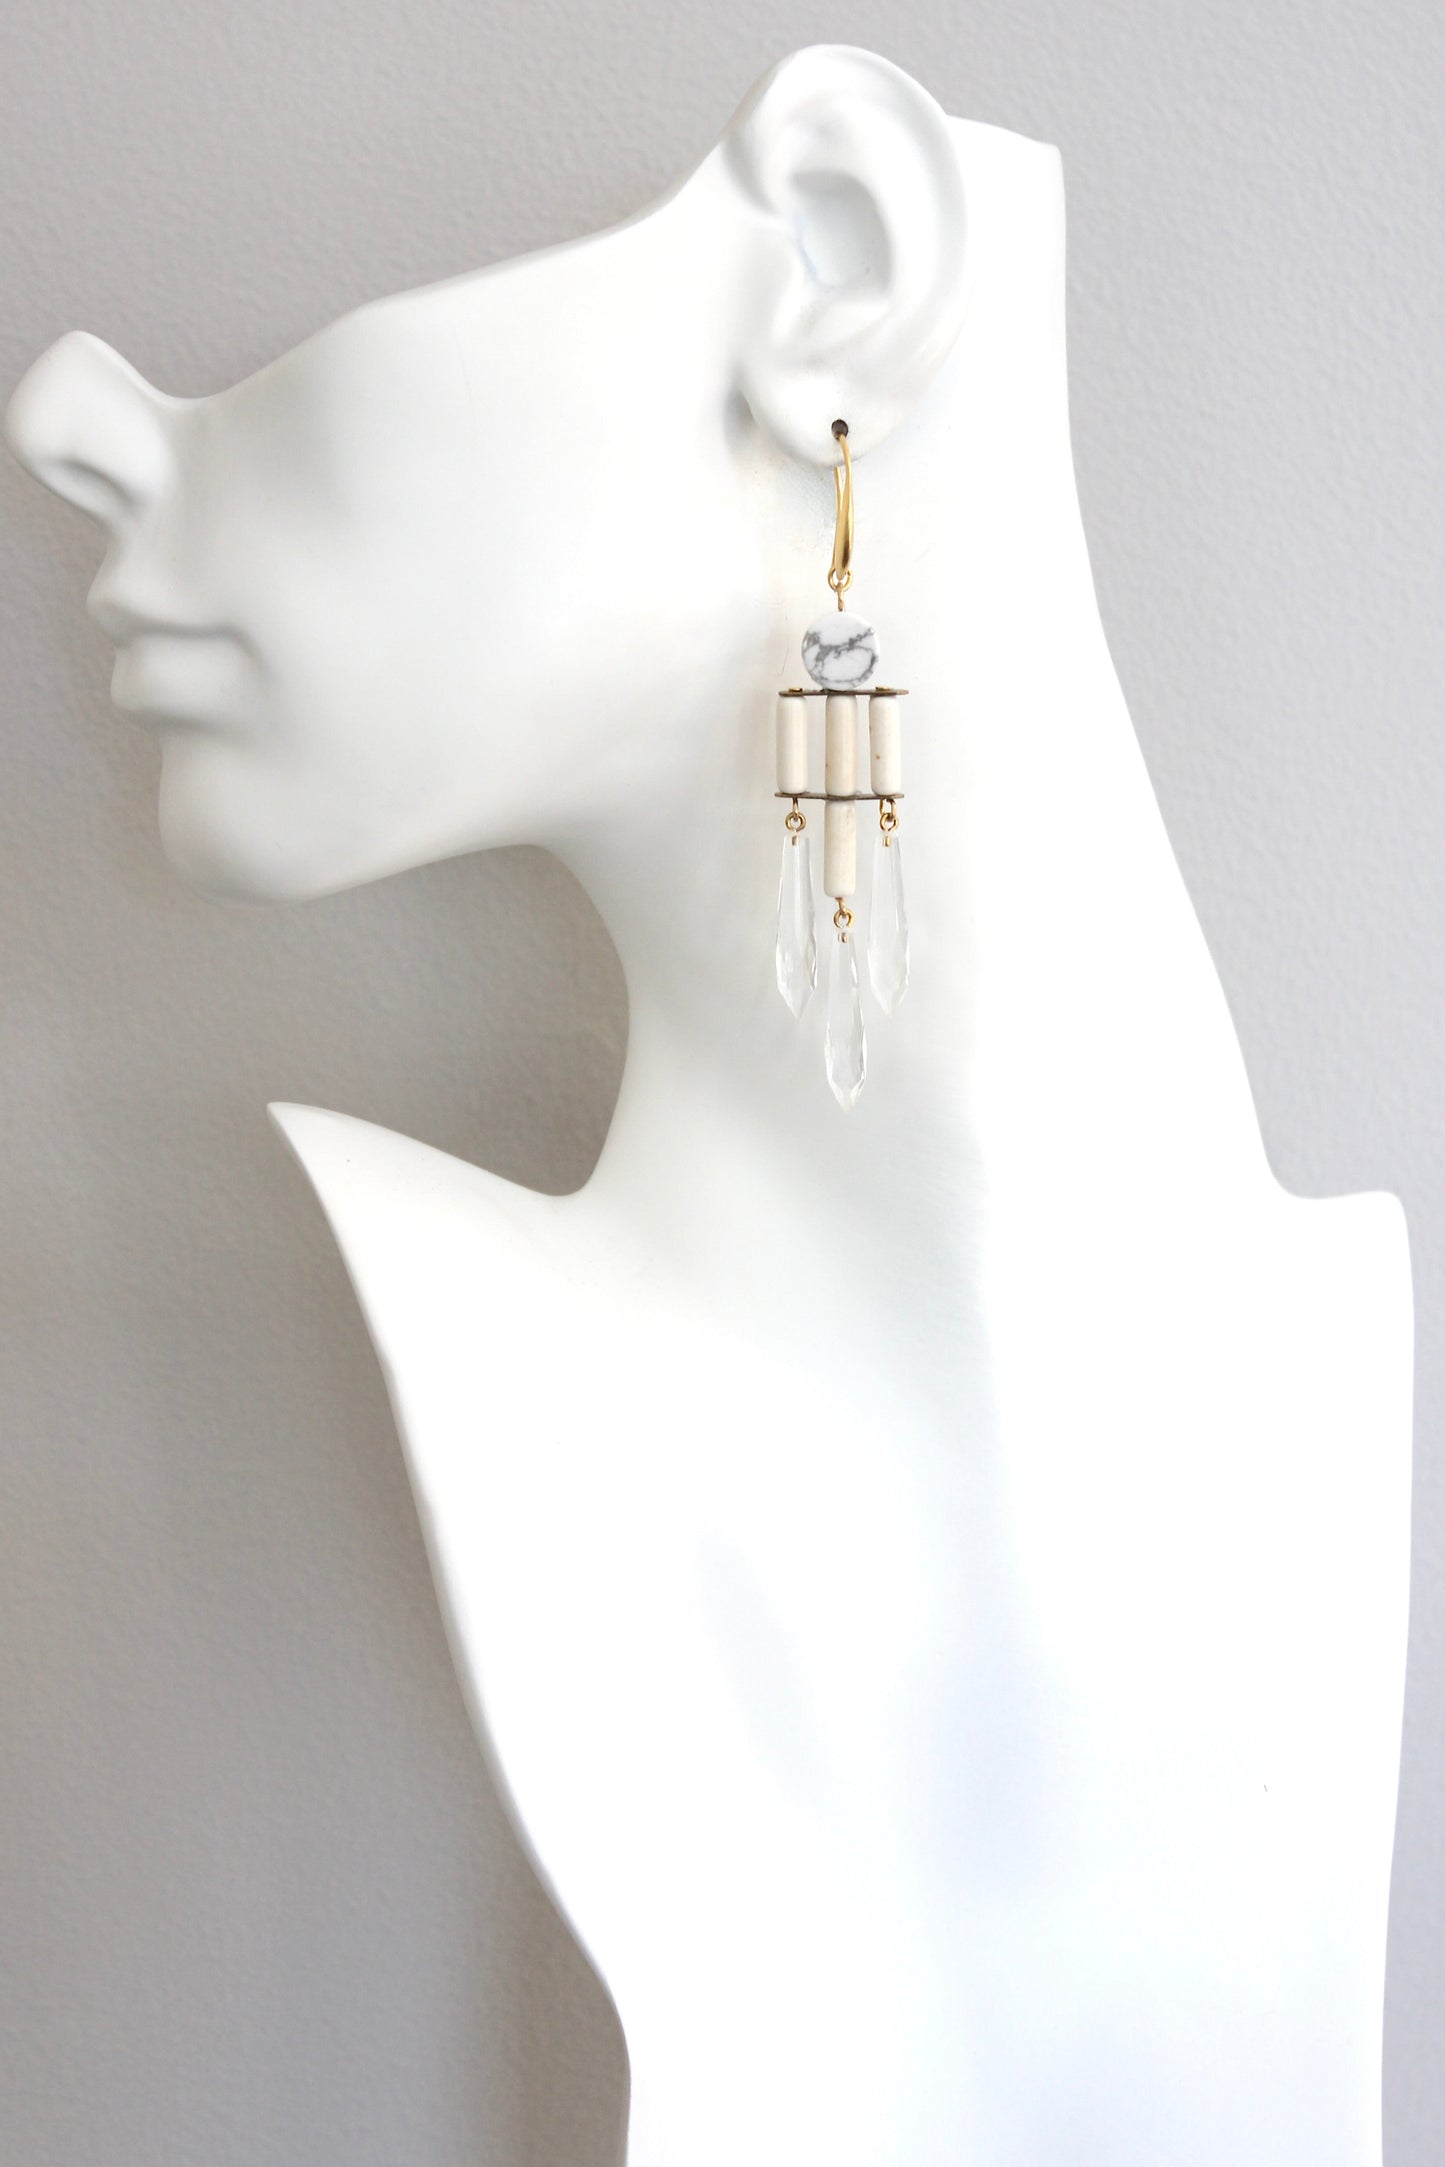 ISLE49 White and crystal geometric chandelier earrings